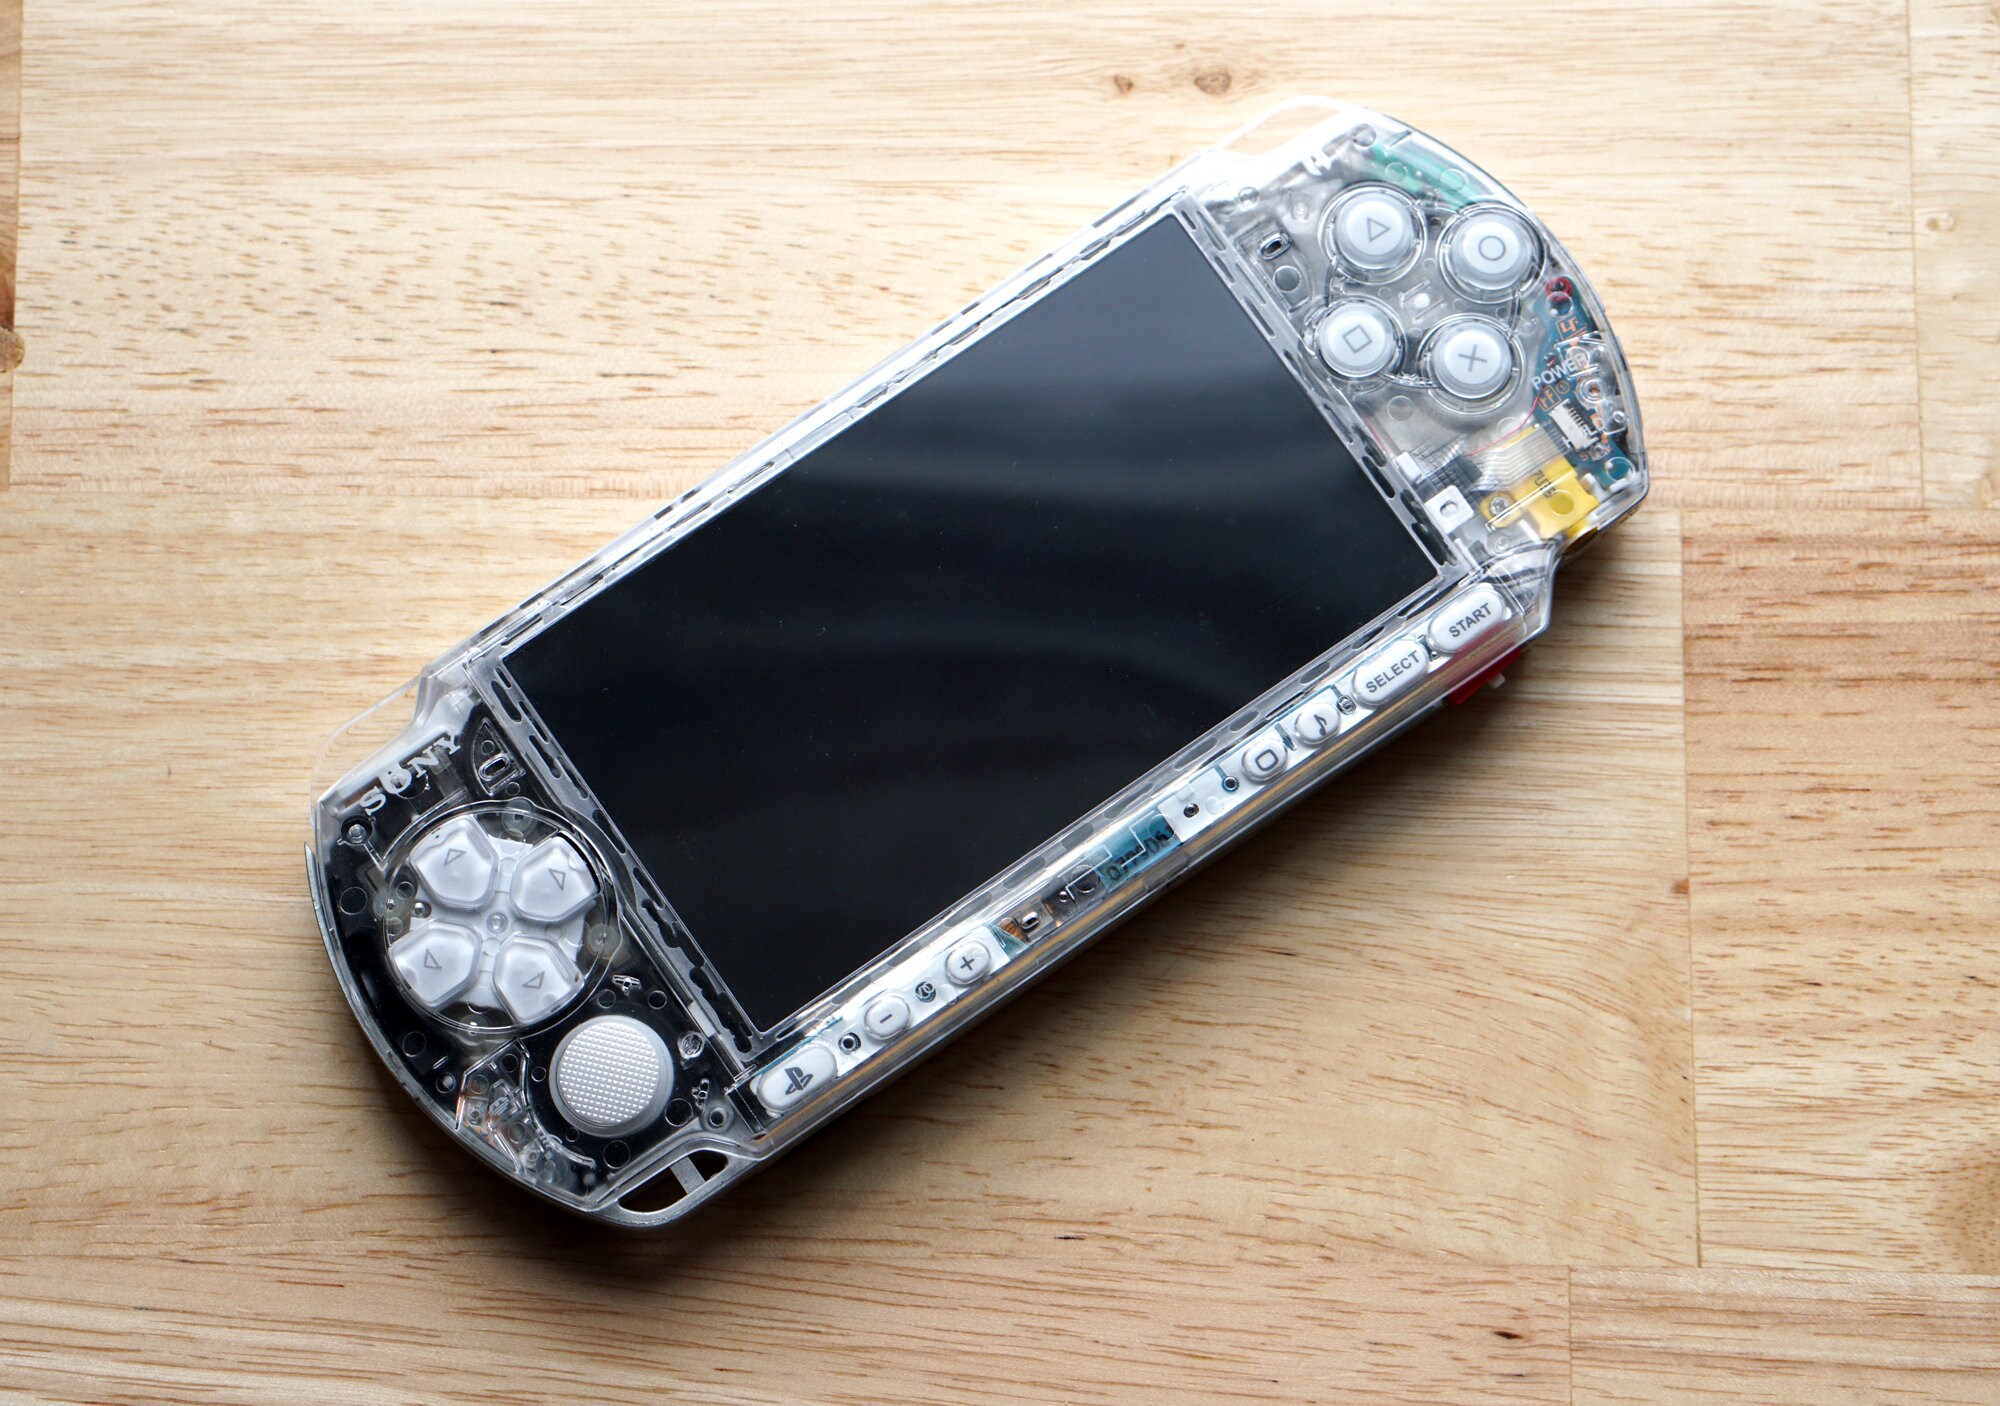 Carcasa protectora, para consola de juegos PSP 2000 3000, cubierta  protectora de cristal transparente, carcasa completa con soporte de  película